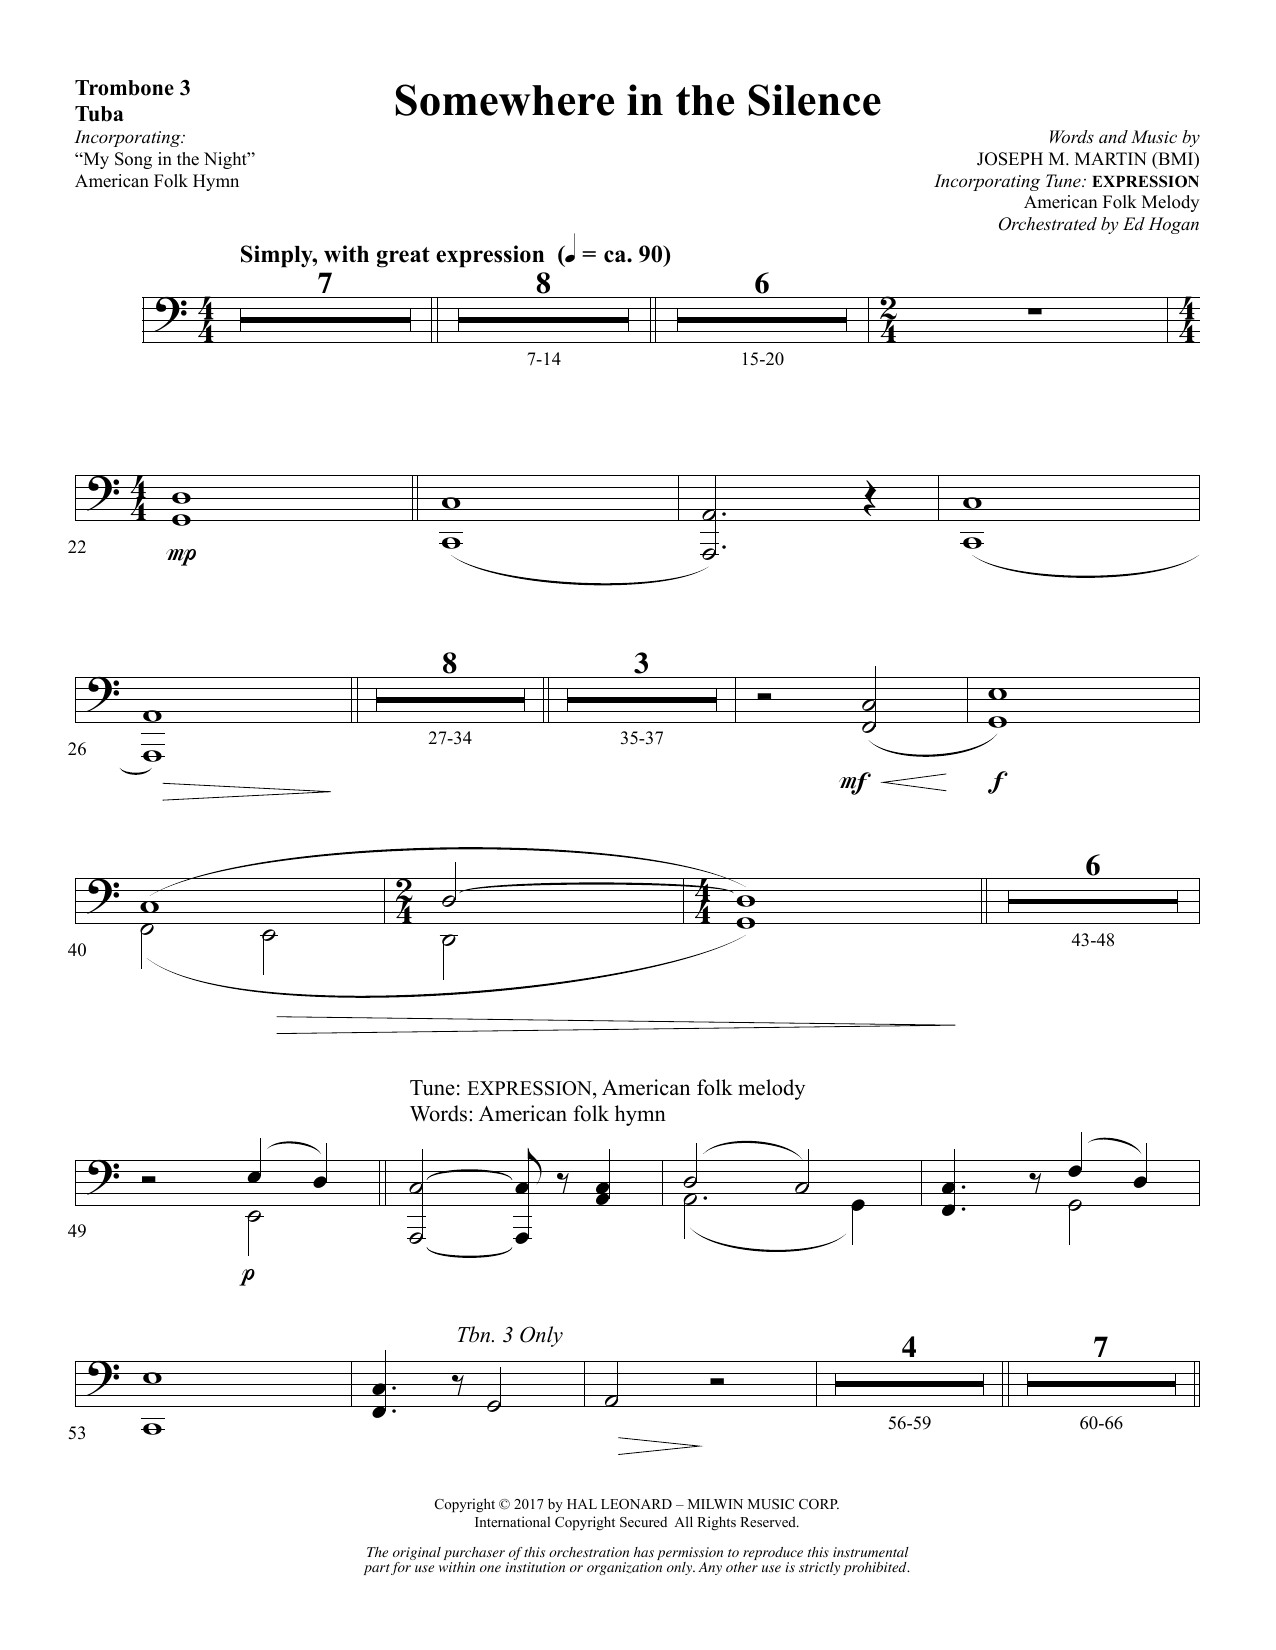 Download Joseph M. Martin Somewhere in the Silence - Trombone 3/T Sheet Music